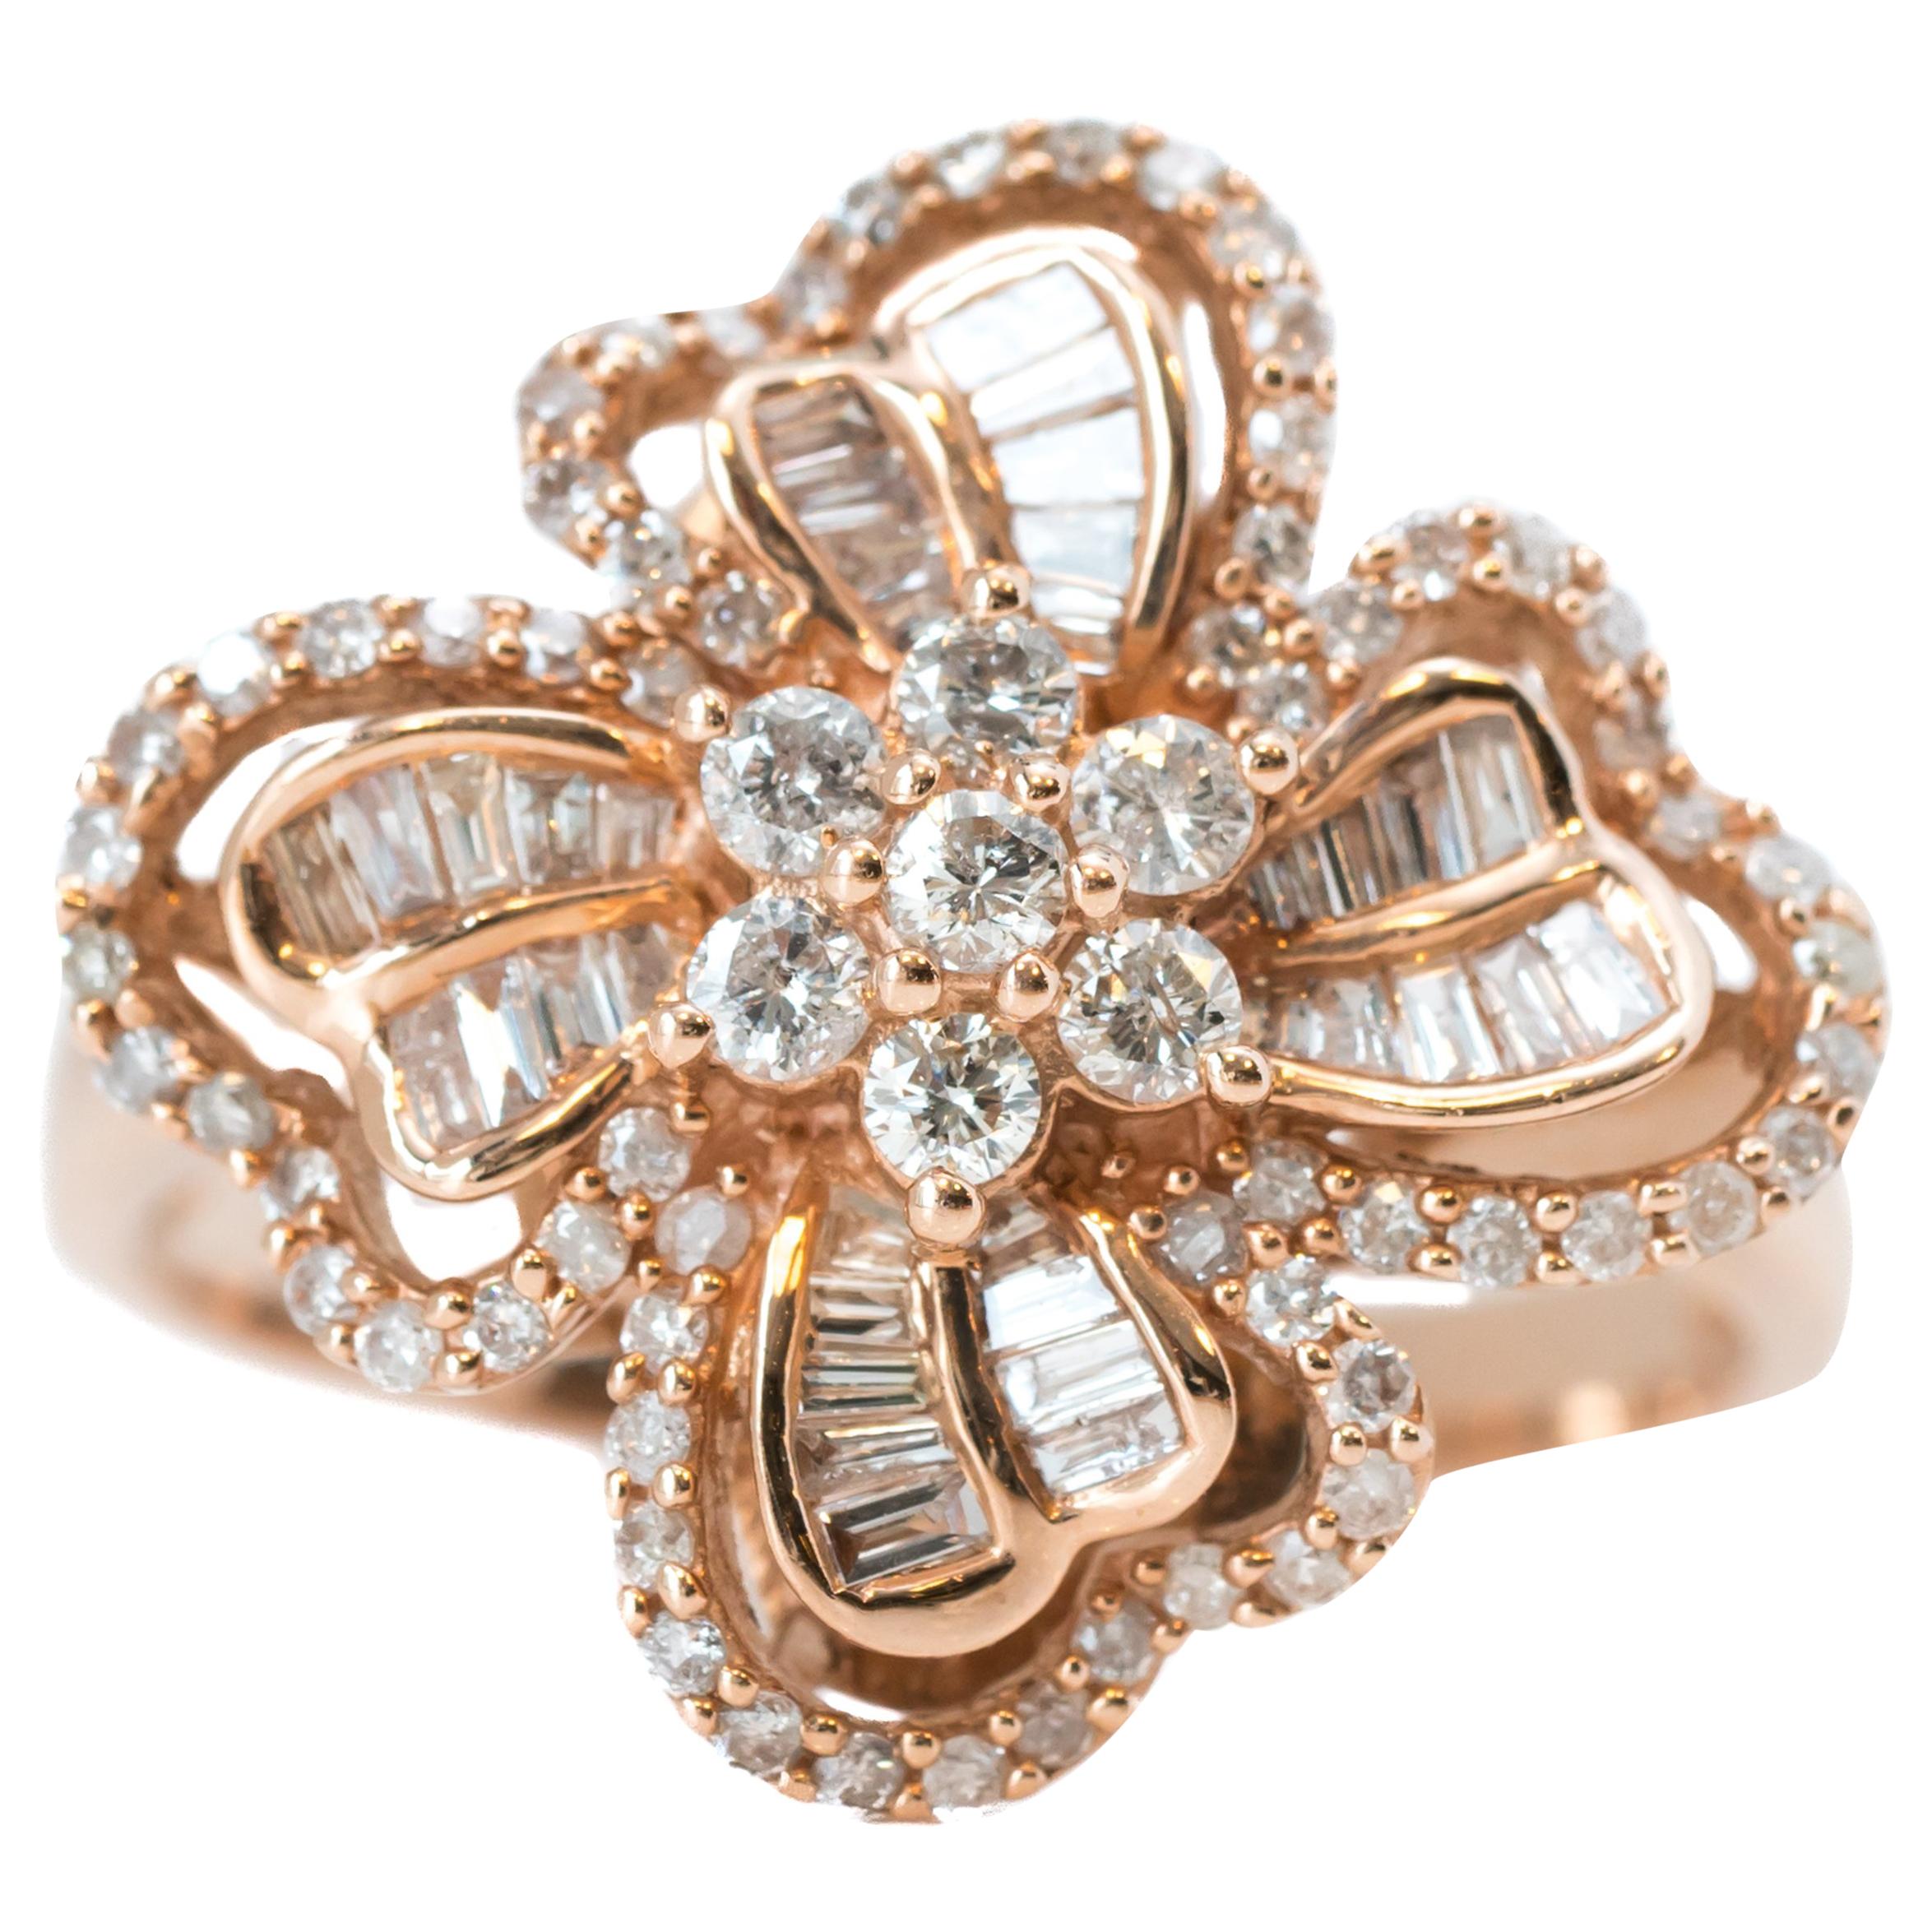 1 Carat Diamond and 14 Karat Rose Gold Floral Ring